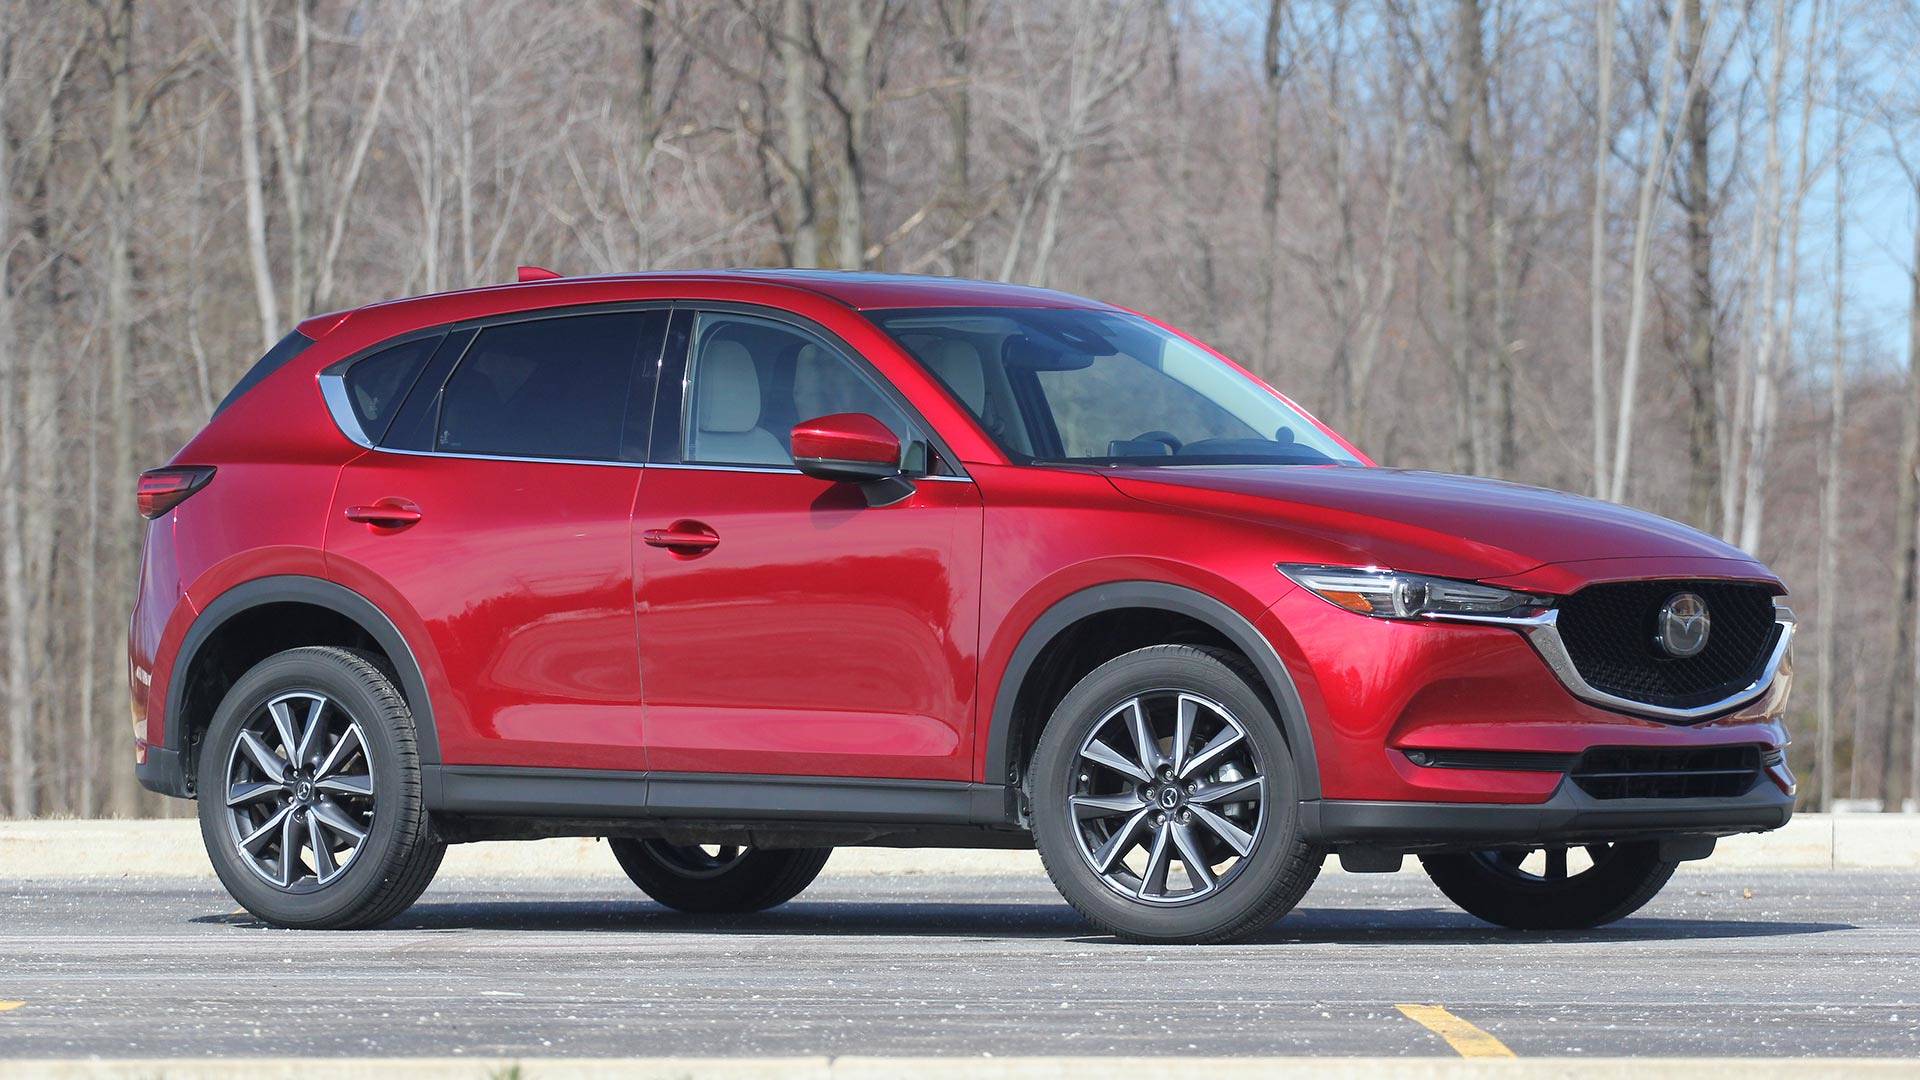 Мазда сх 5 (Mazda CX 5) 2019 - цена, отзывы владельцев, фото, тест-драйв видео, характеристики